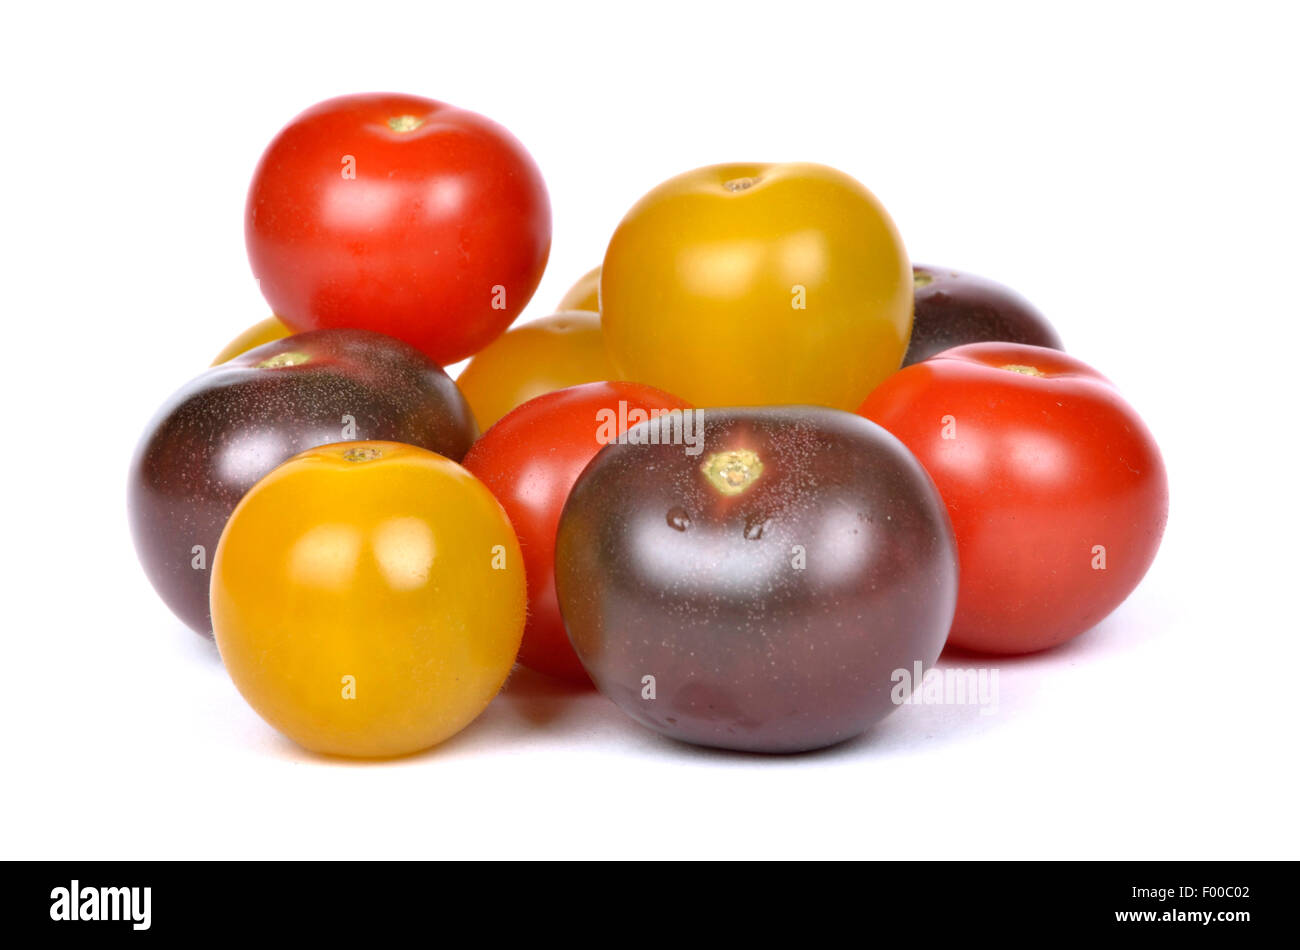 garden tomato (Solanum lycopersicum, Lycopersicon esculentum), cherry tomatoes in yellow, red and black Stock Photo